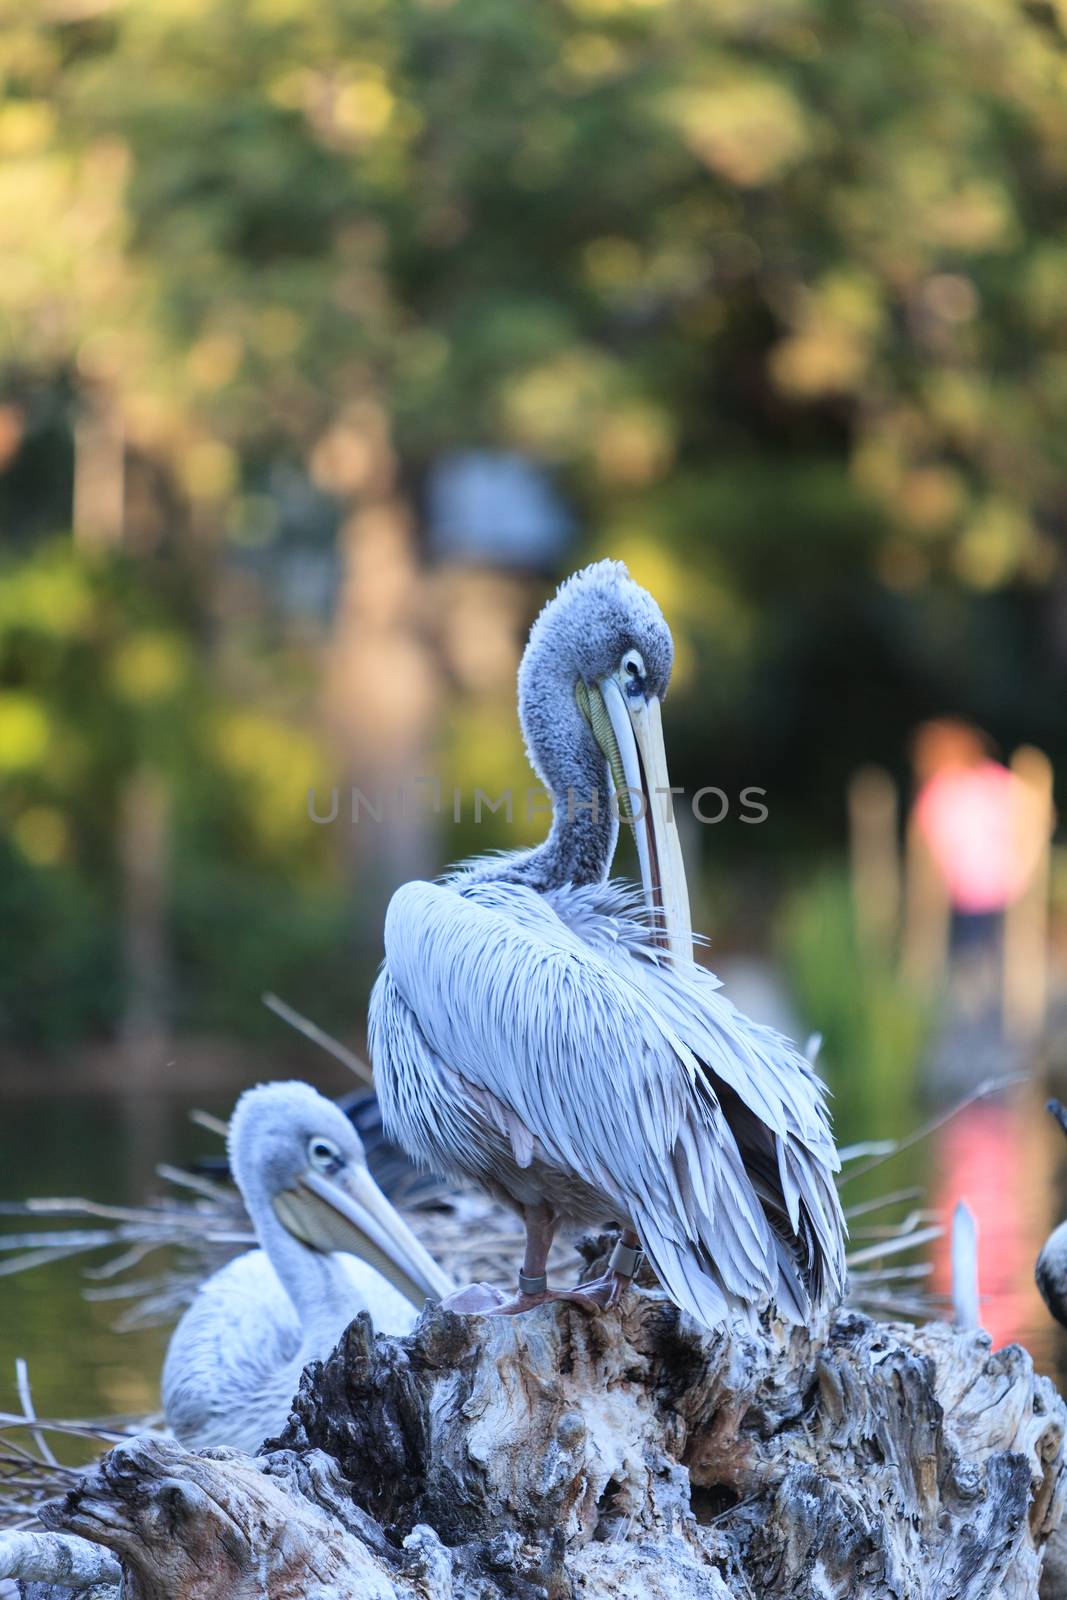 Great white pelican by steffstarr